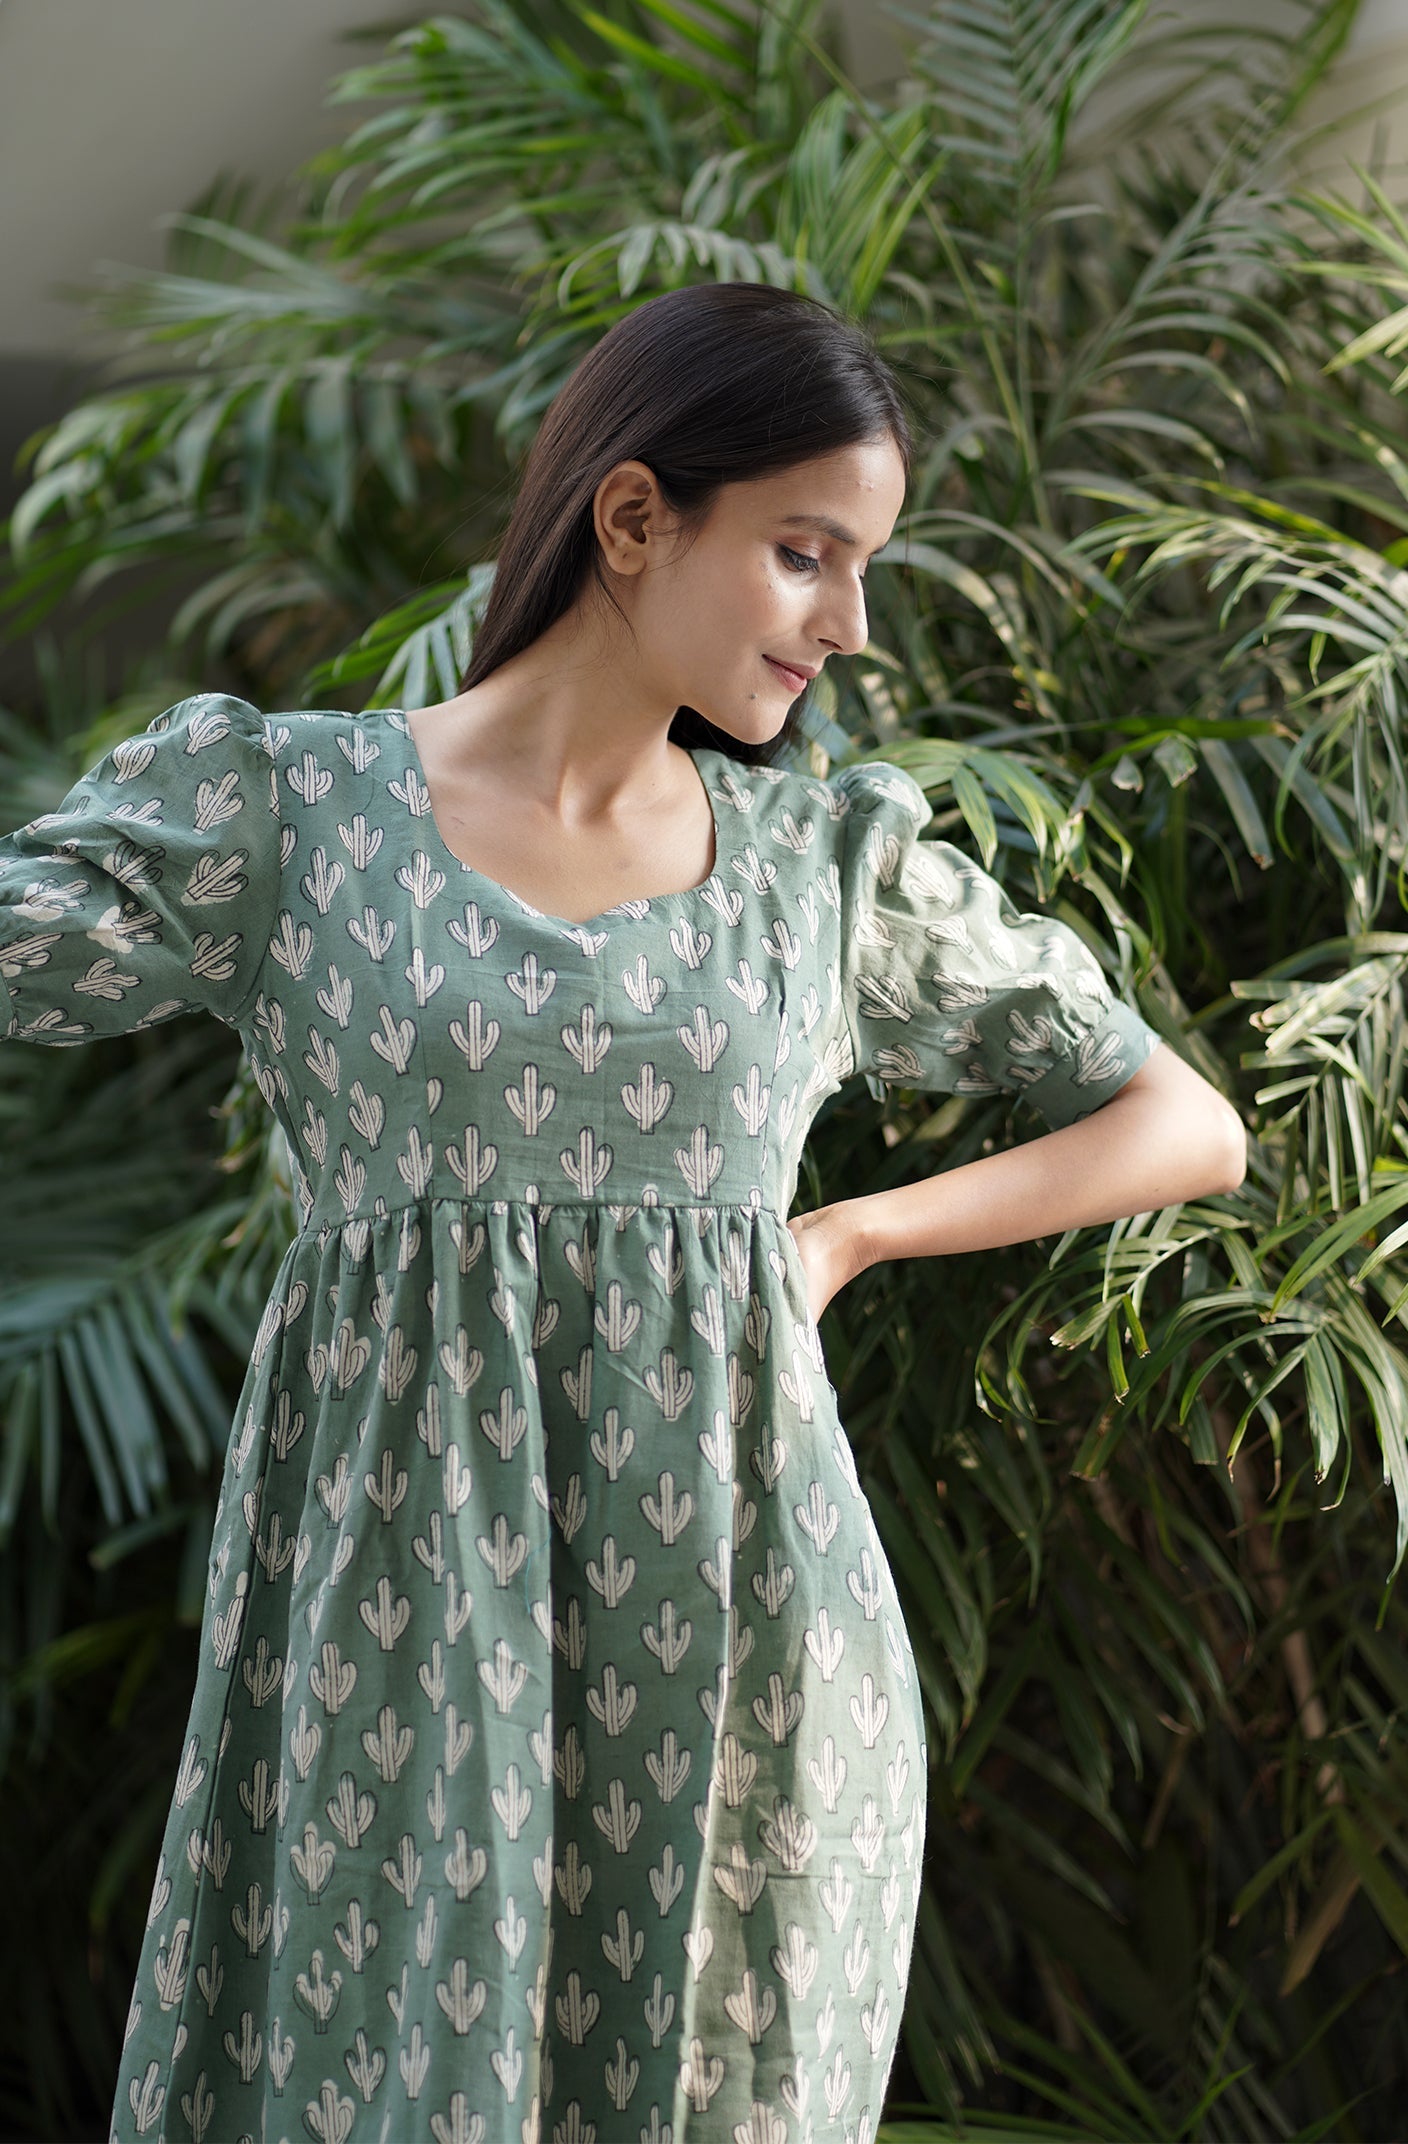 Buy JAY BALAJI DRESSES Women's Cotton Patiyala Dress-Material (Pack of 10)  at Amazon.in